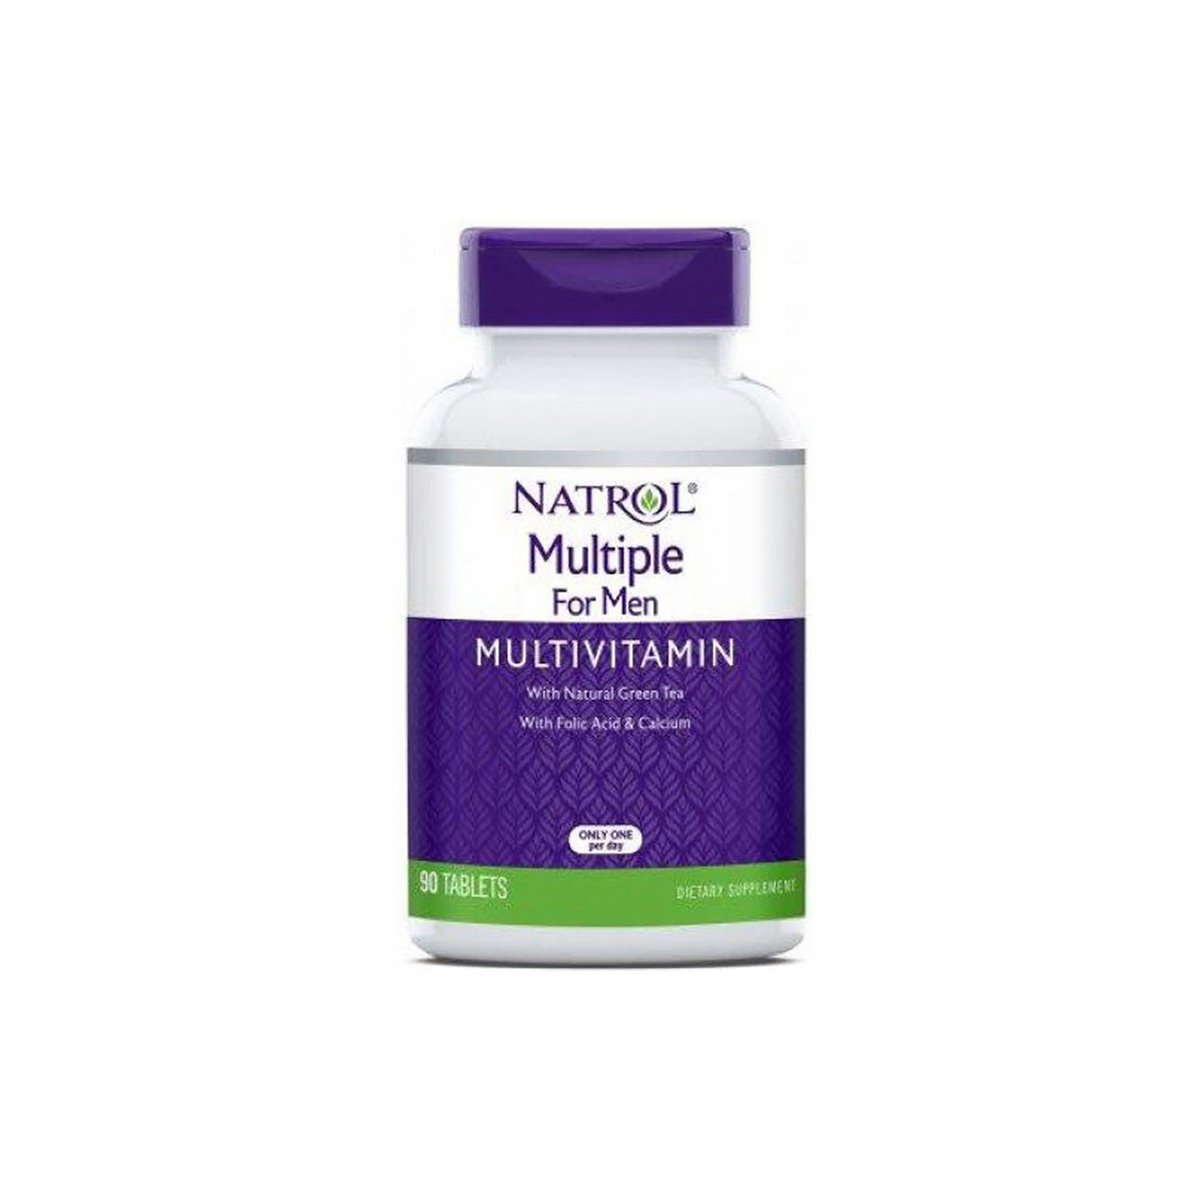 Natrol Multiple Multivitamin for Men 90 Tablets